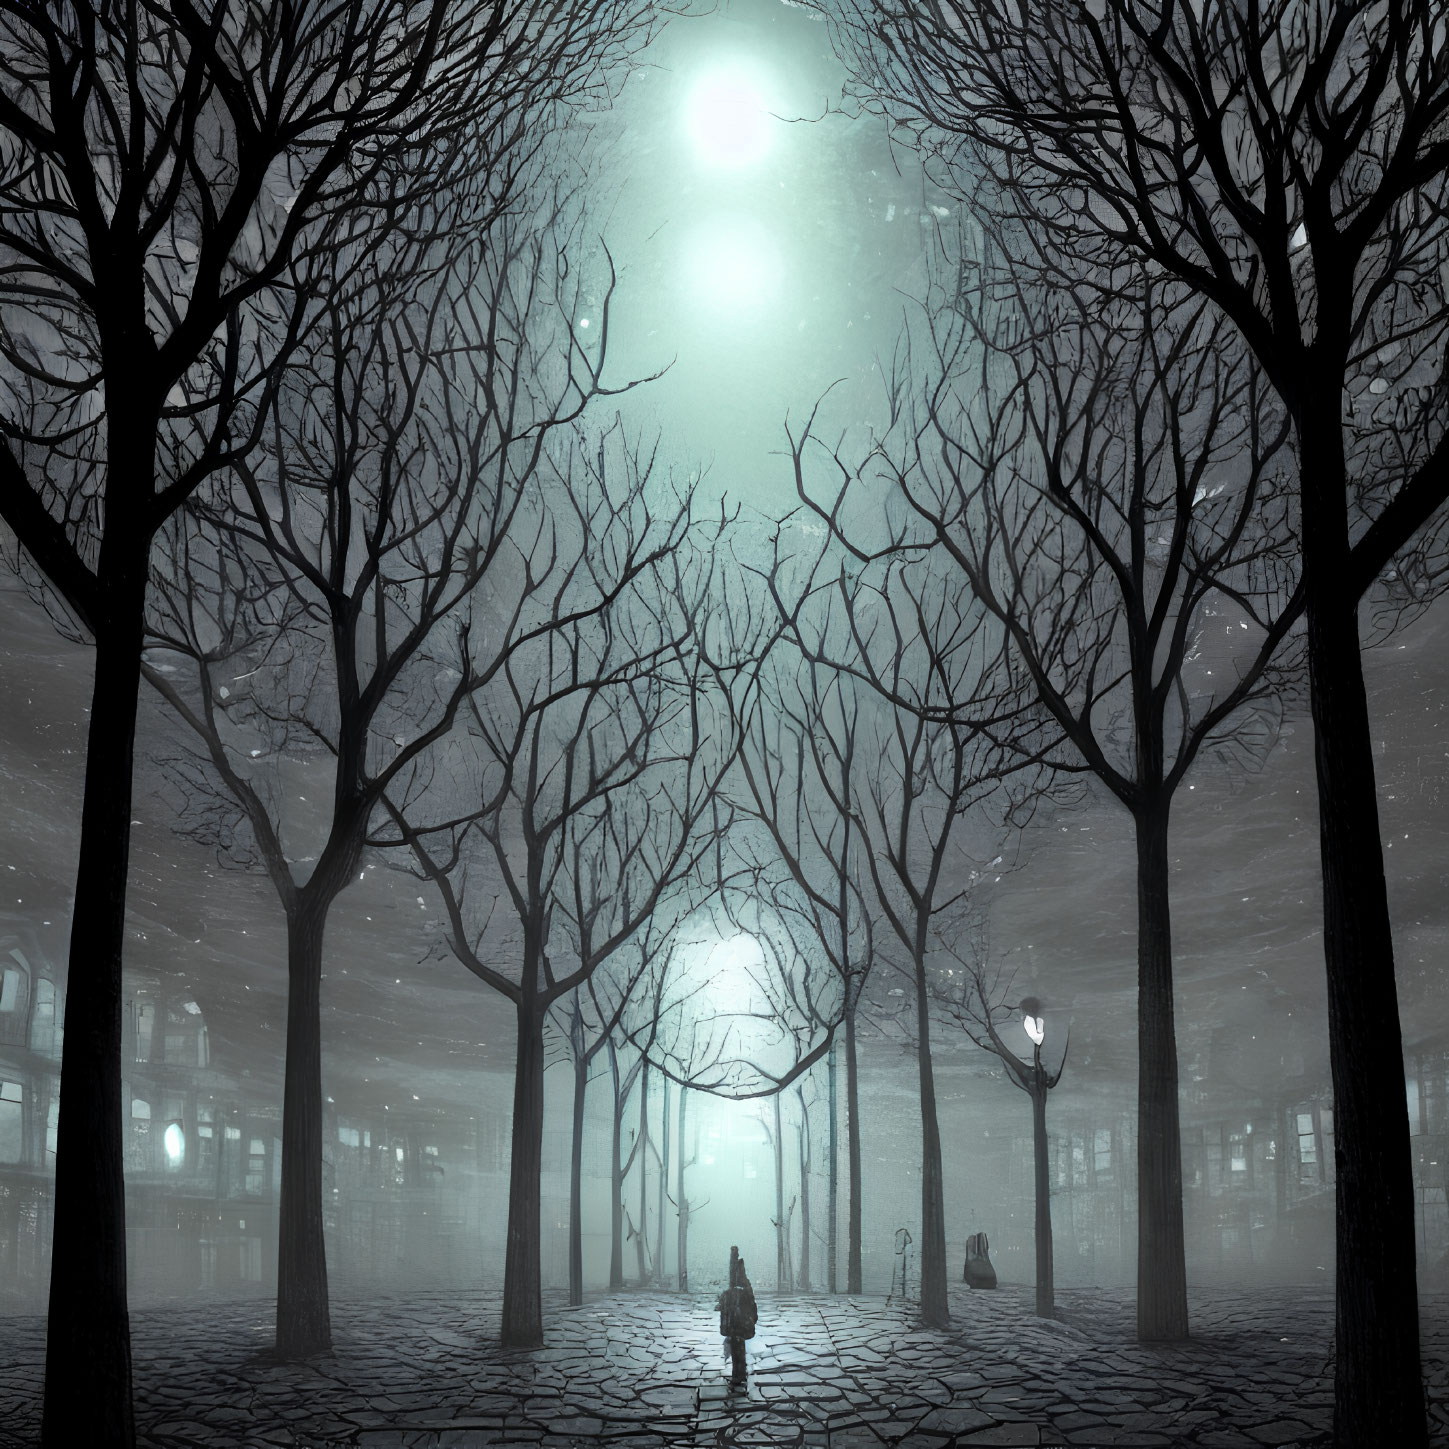 Solitary figure walking on misty, lamp-lit cobblestone path